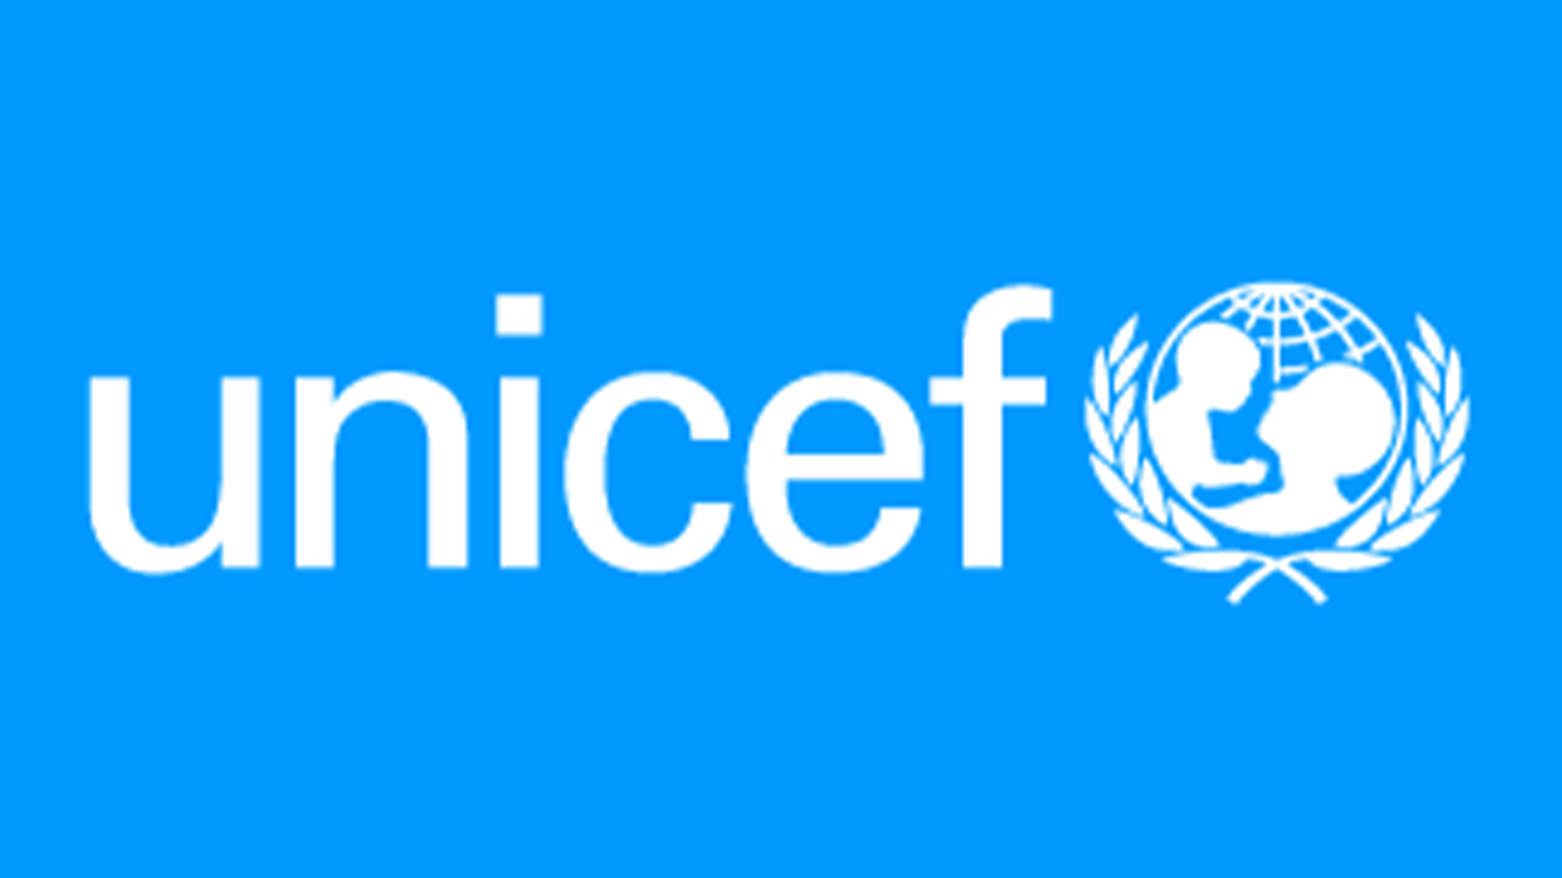 The logo of UNICEF. (Photo: The United Nations)